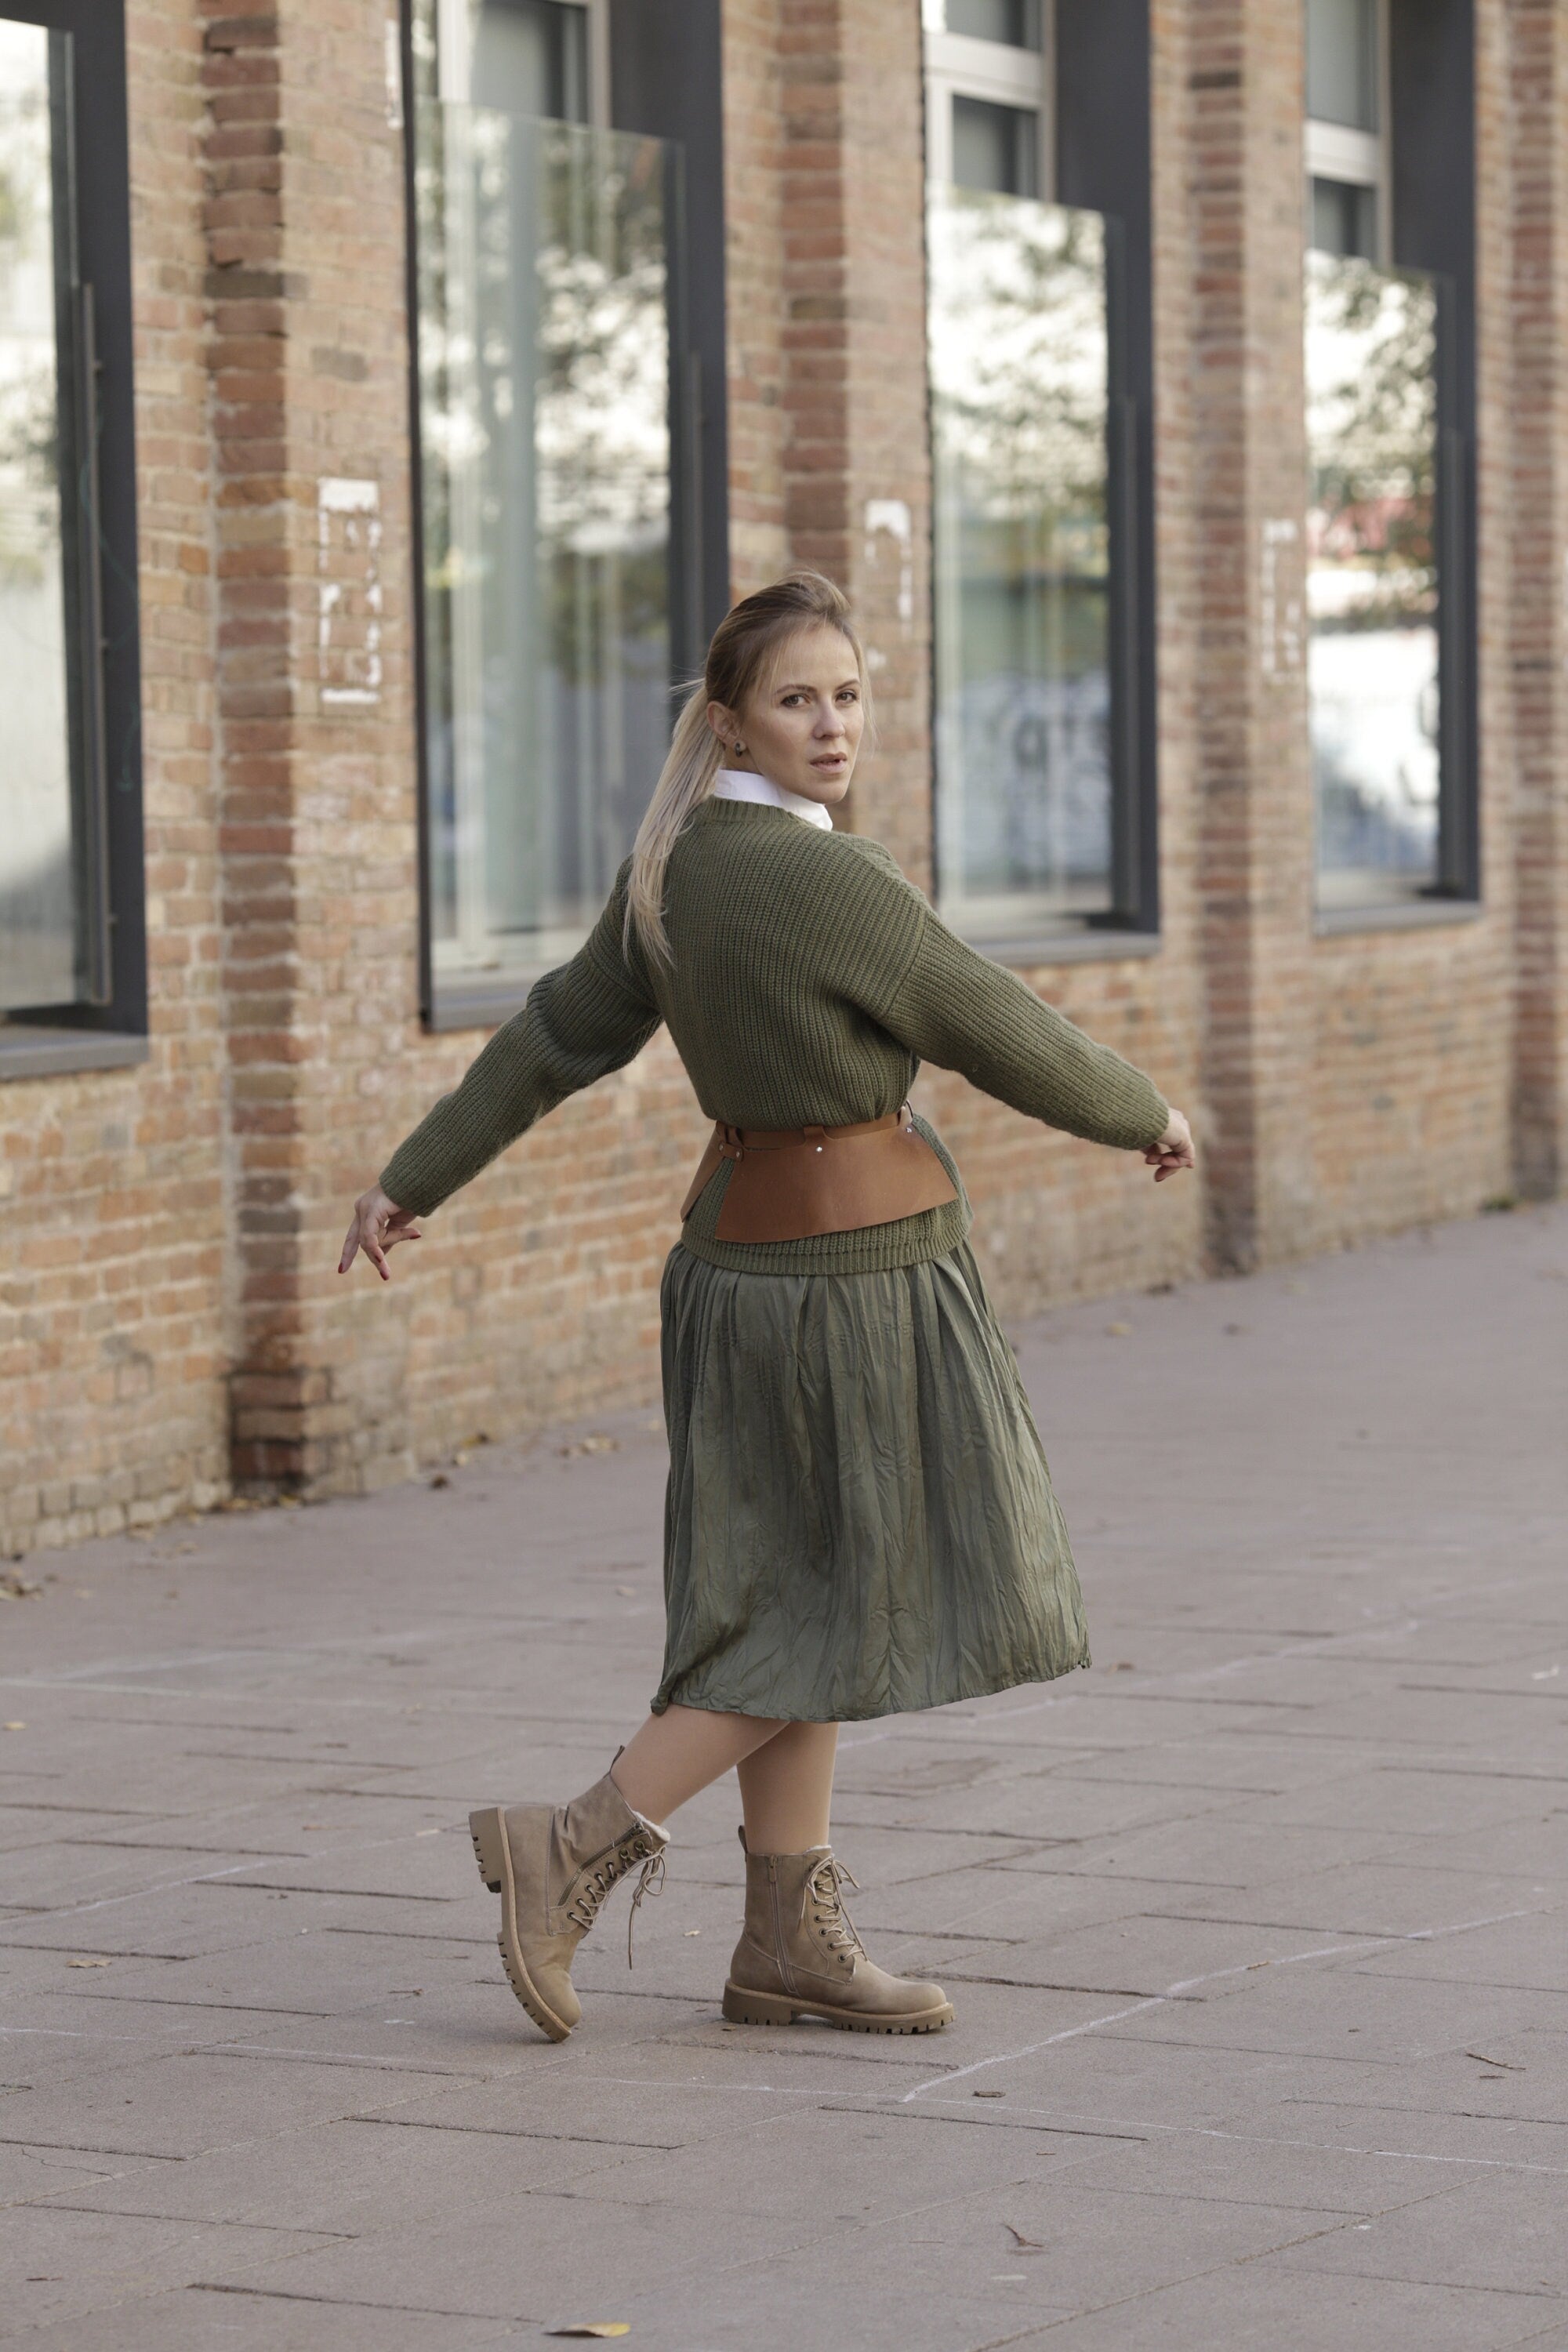 Corset top Belt Handmade Genuine Leather for #skirt #leatherskirt #peplum  #peplumbelt #peplumskirt #leatherdress …